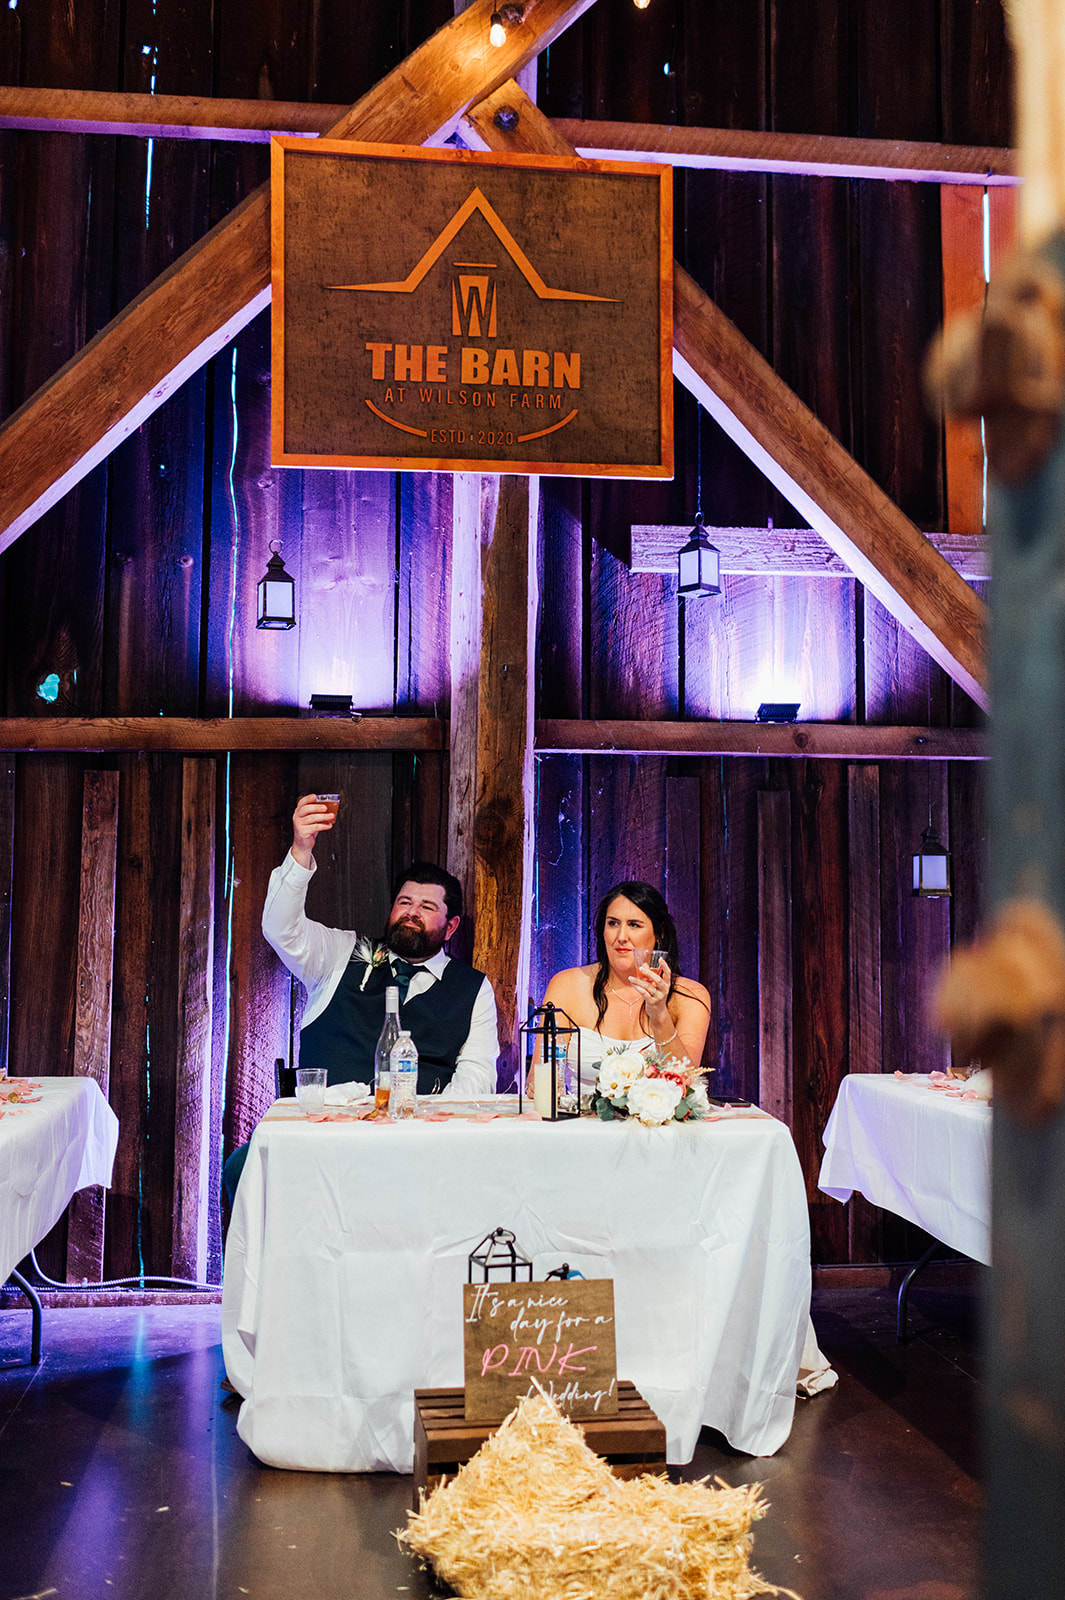 The Barn at Wilson Farm Wedding